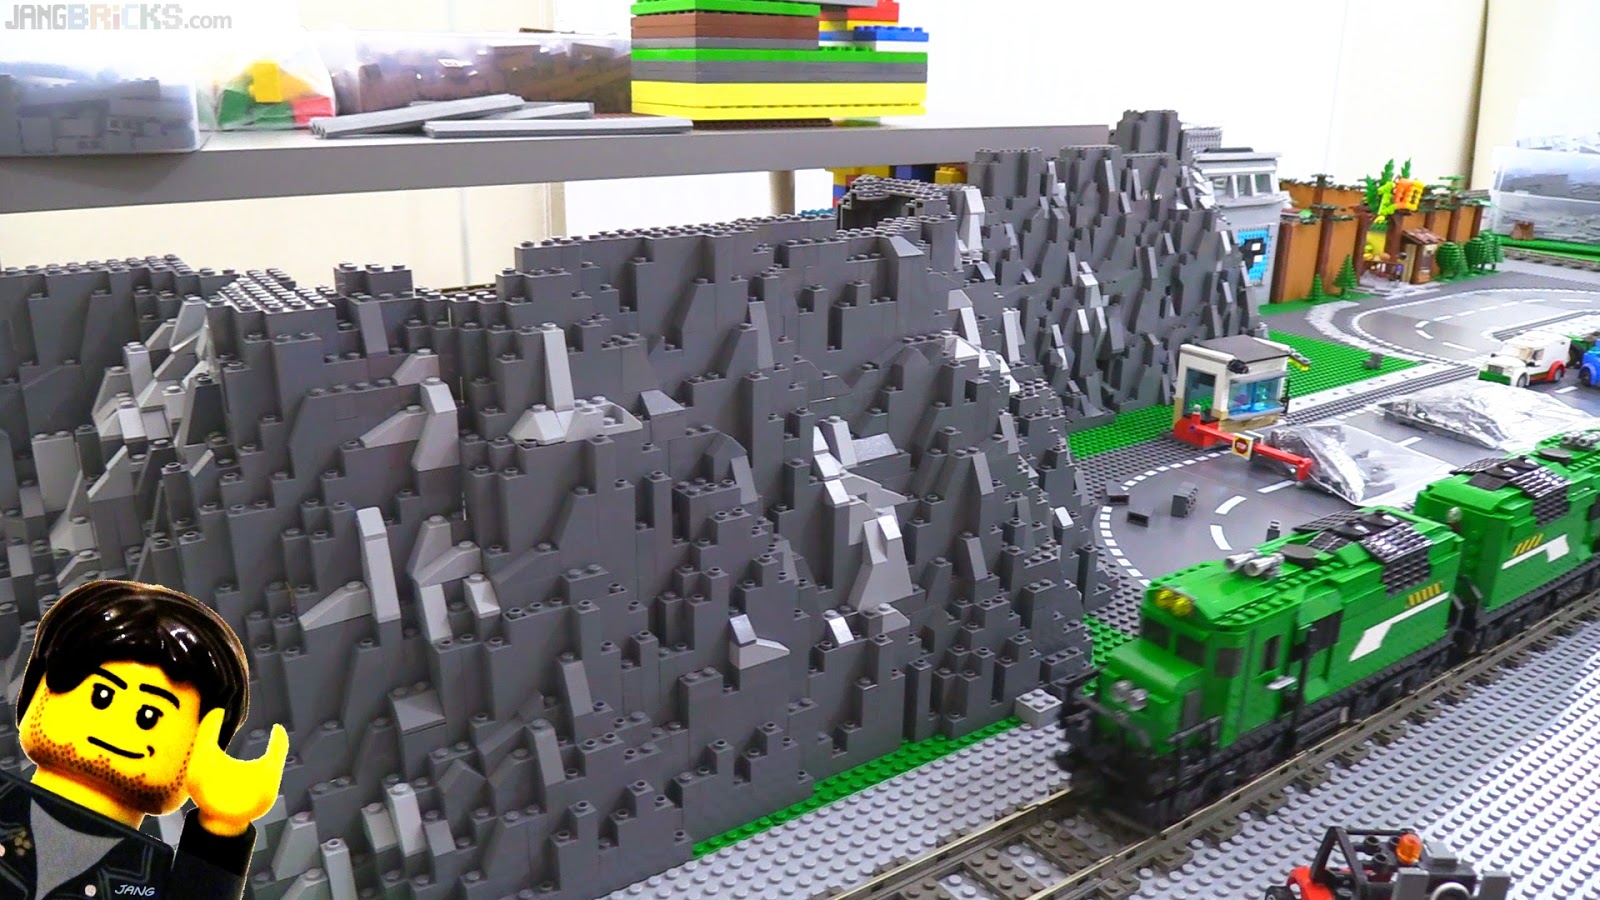 JANGBRiCKS LEGO reviews & MOCs: New Jang New terrain, new train